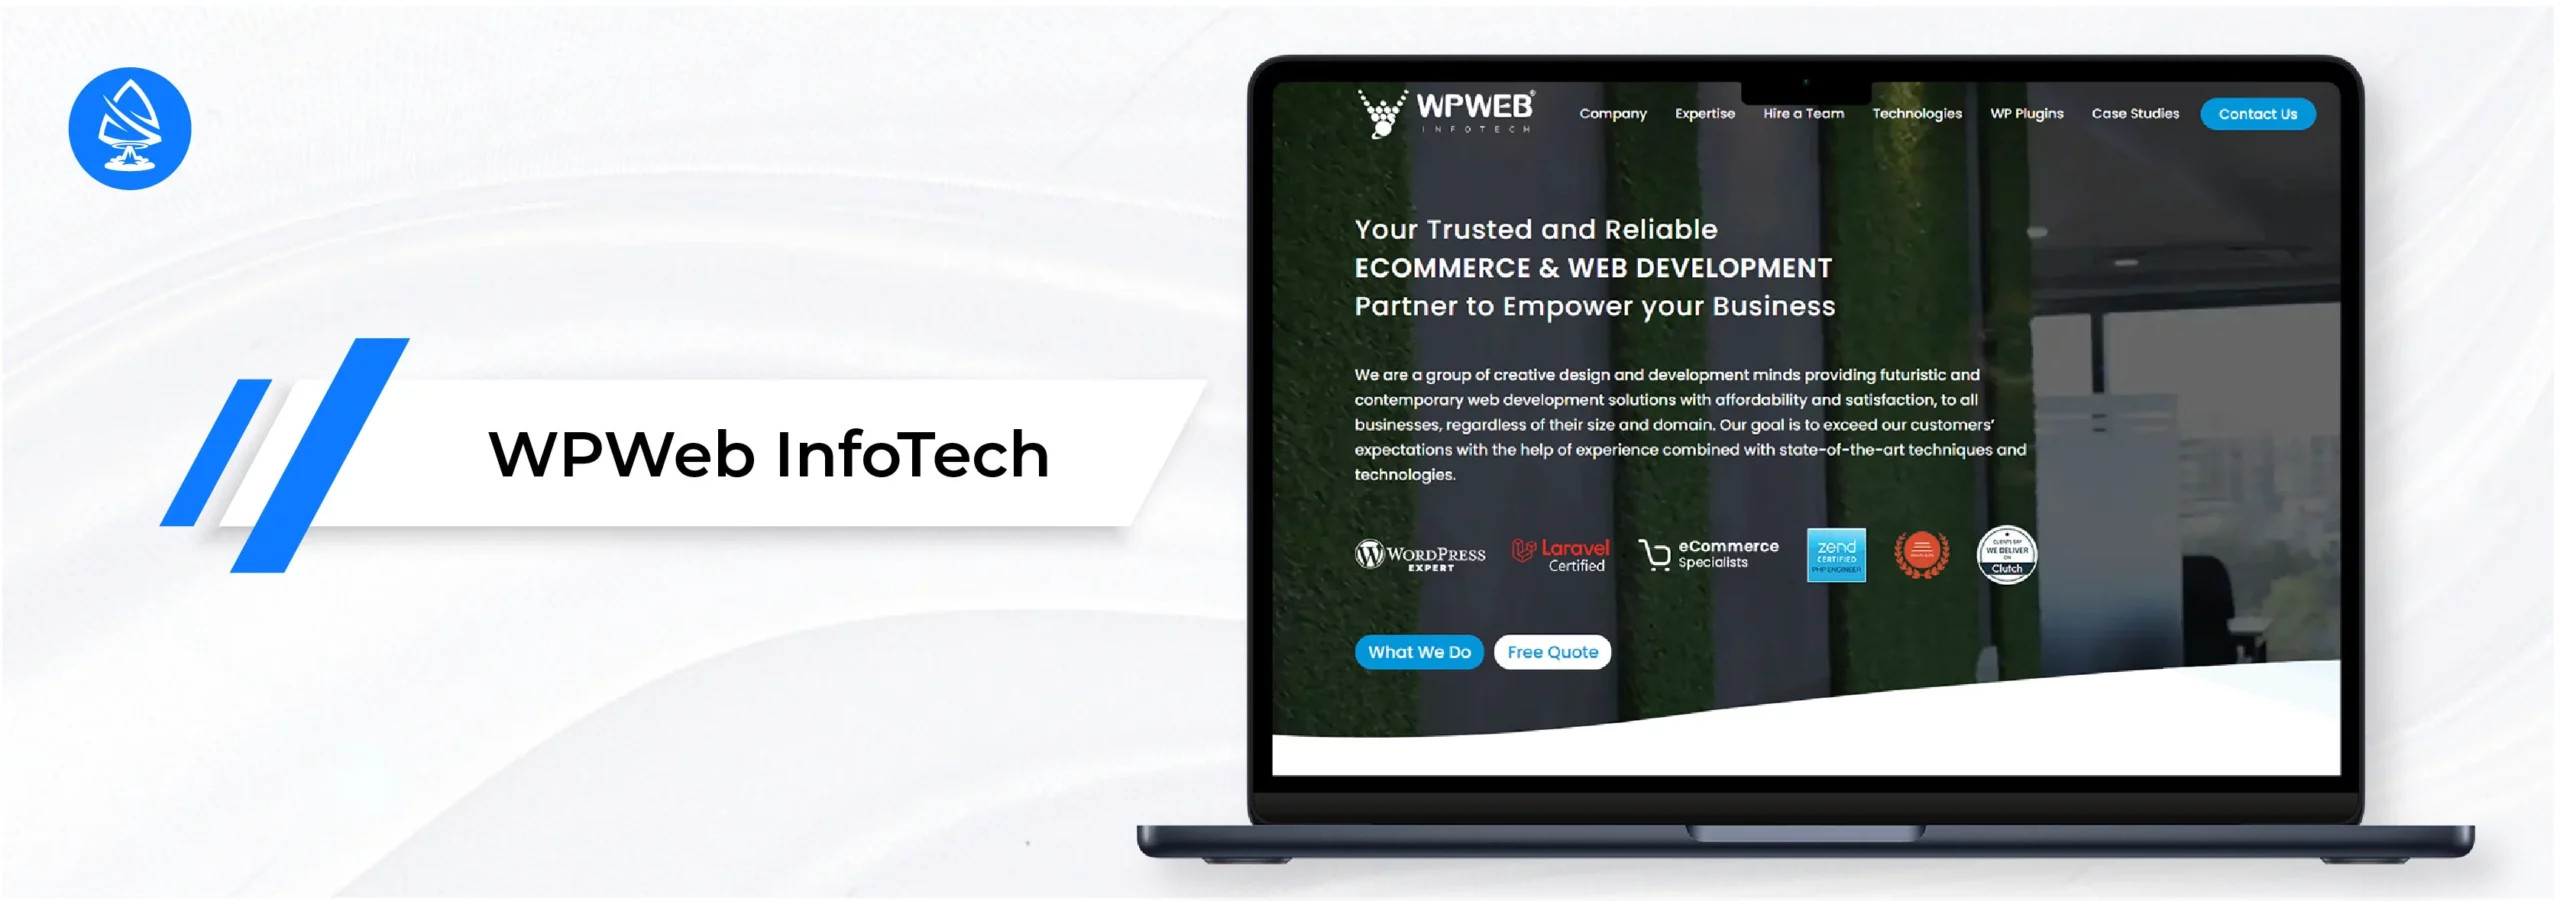 WPWeb Info Tech - wordpress website design agencies